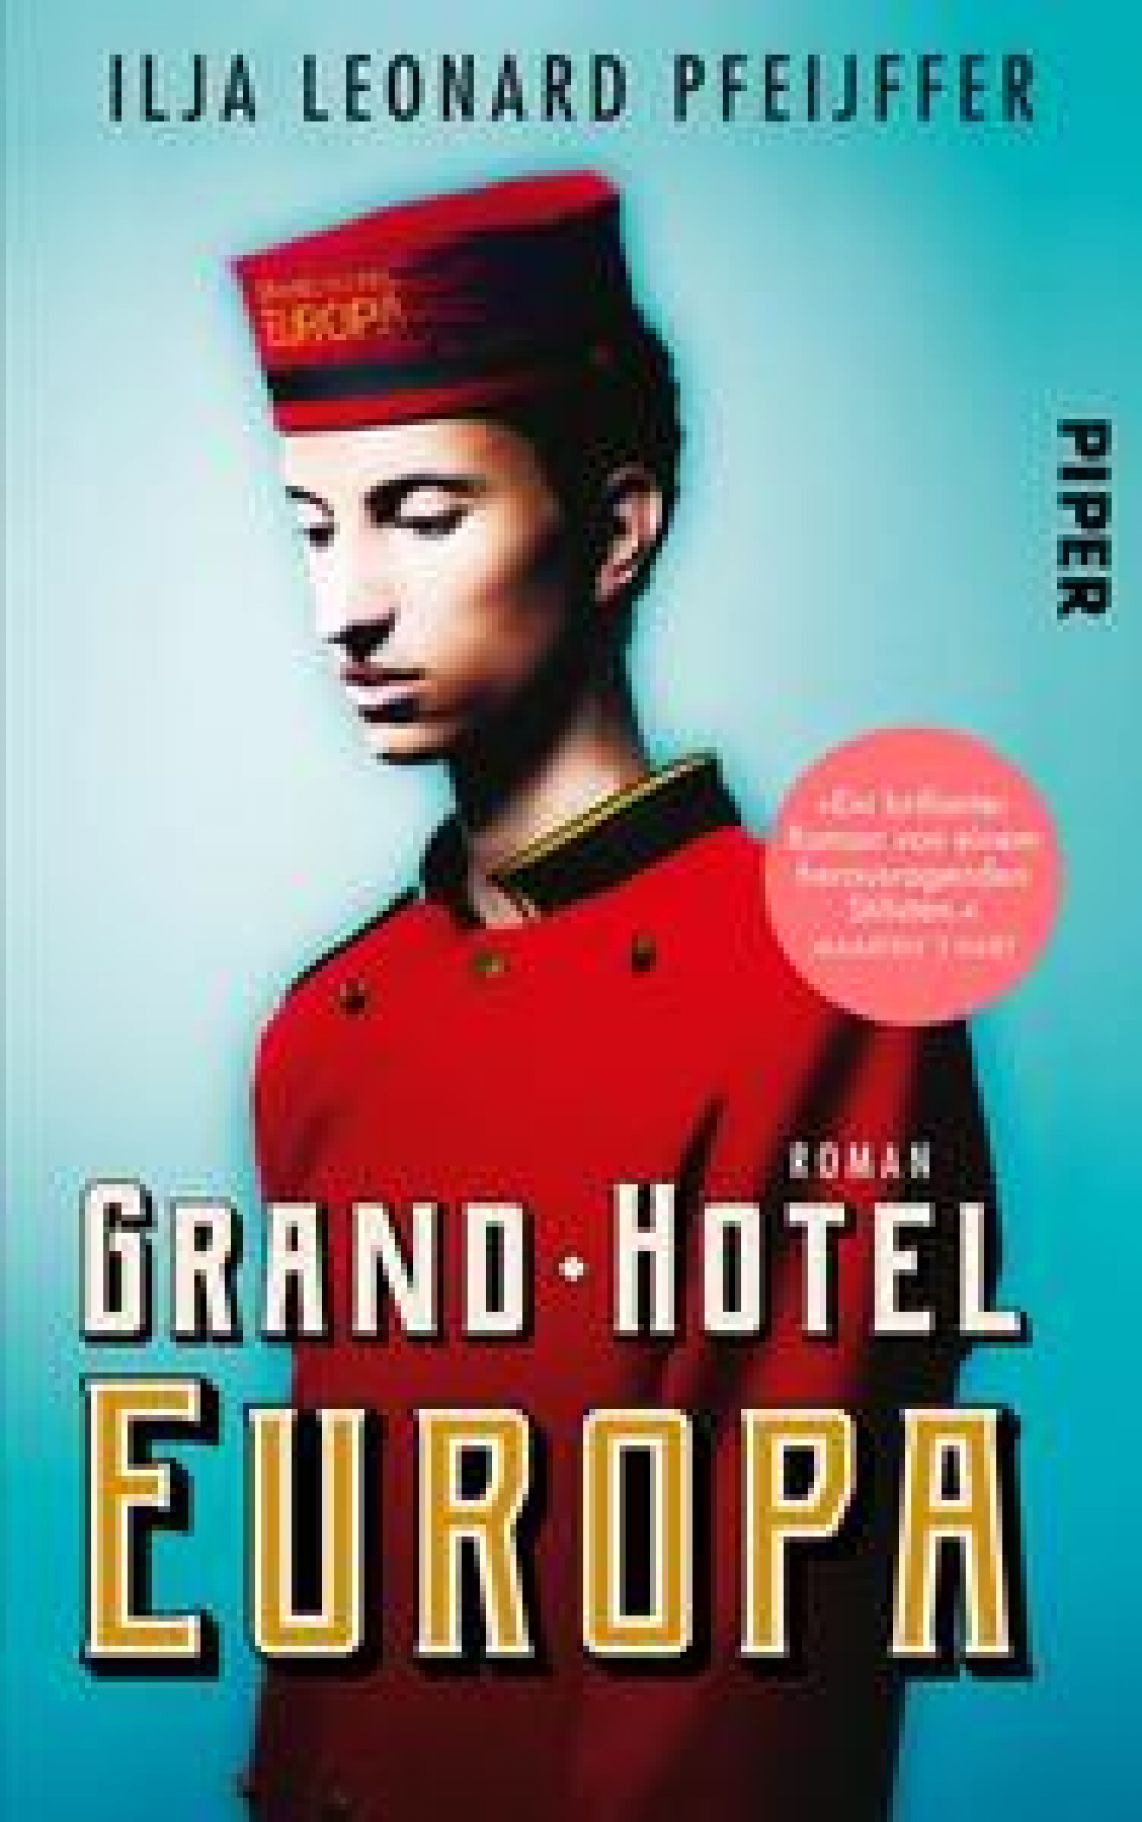 Pfeijffer, Ilja Leonard "Grand Hotel Europa"